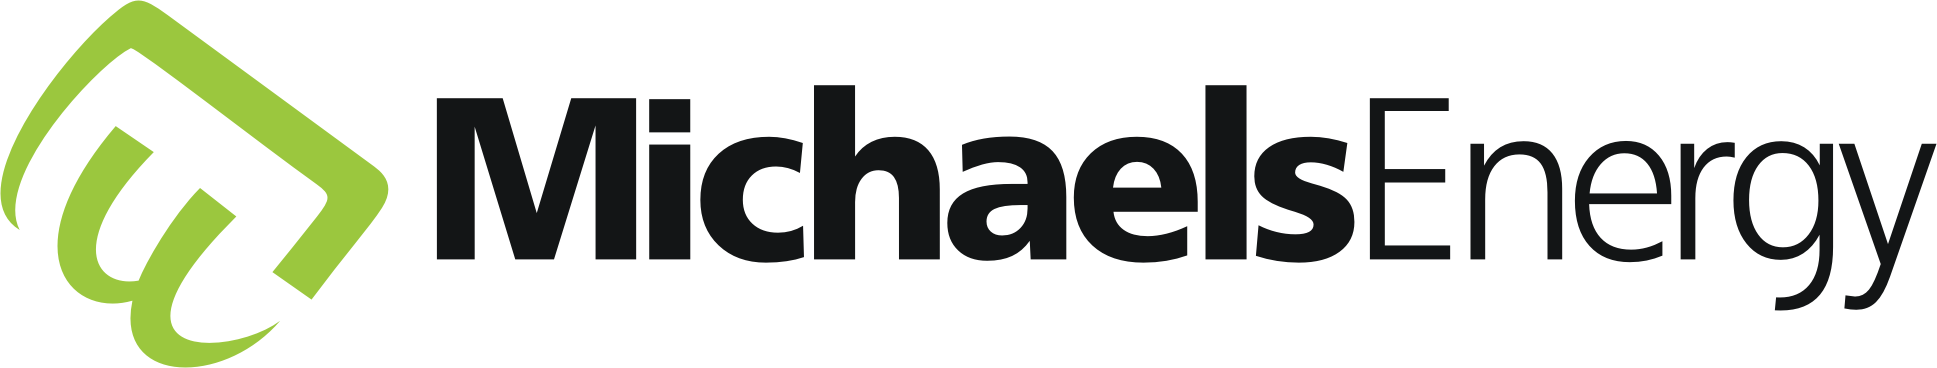 michaels energy logo